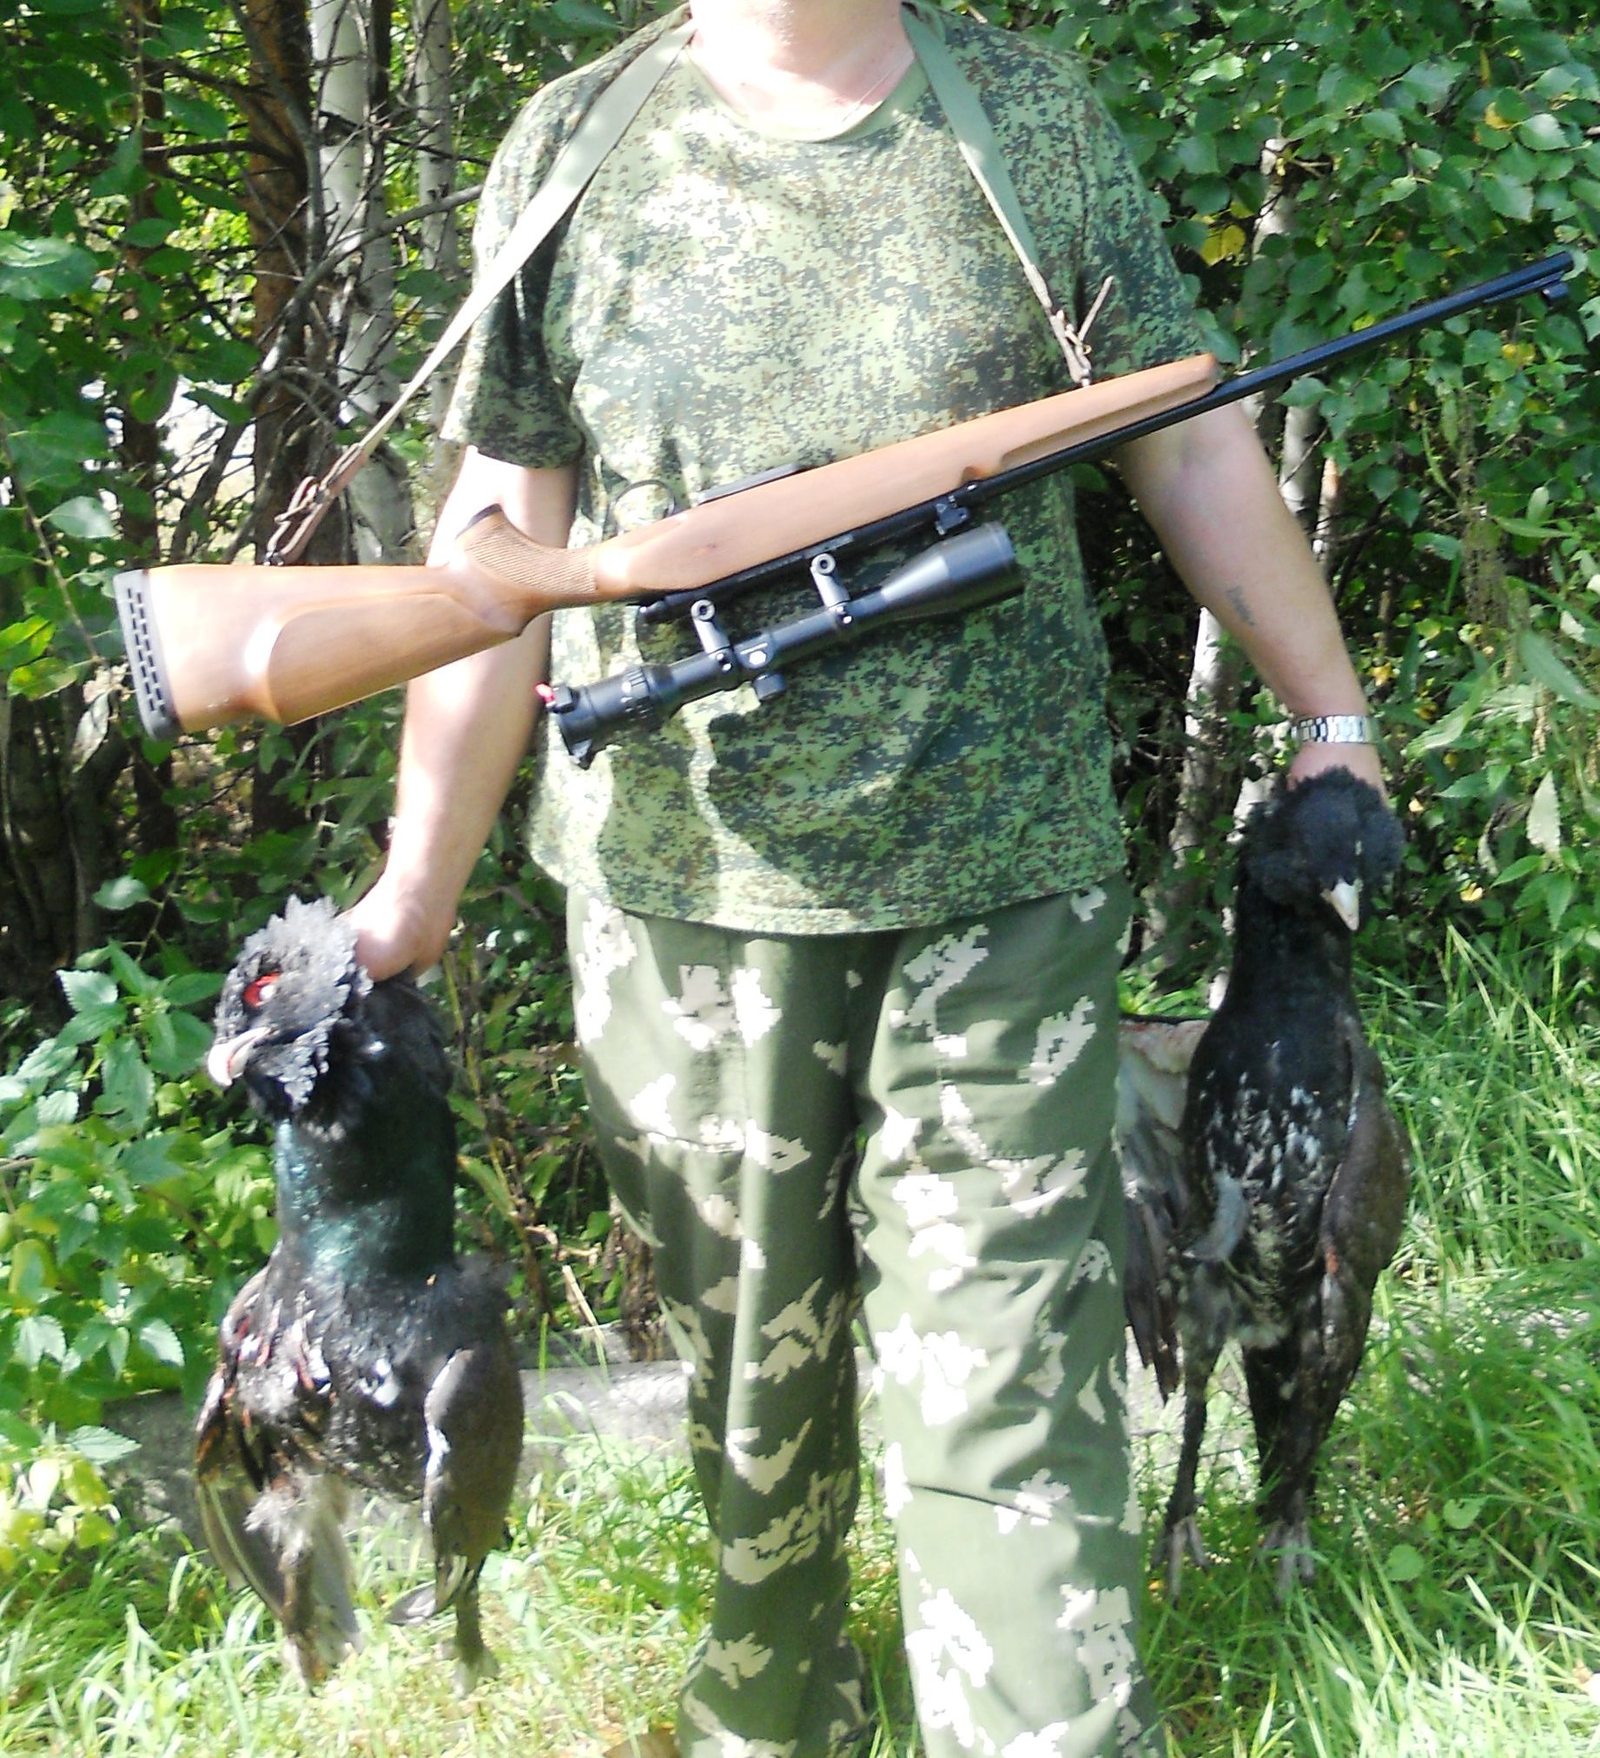 Ay-ya-ya-yay I killed the birds .... - My, Hunting, Wood grouse, Snipers